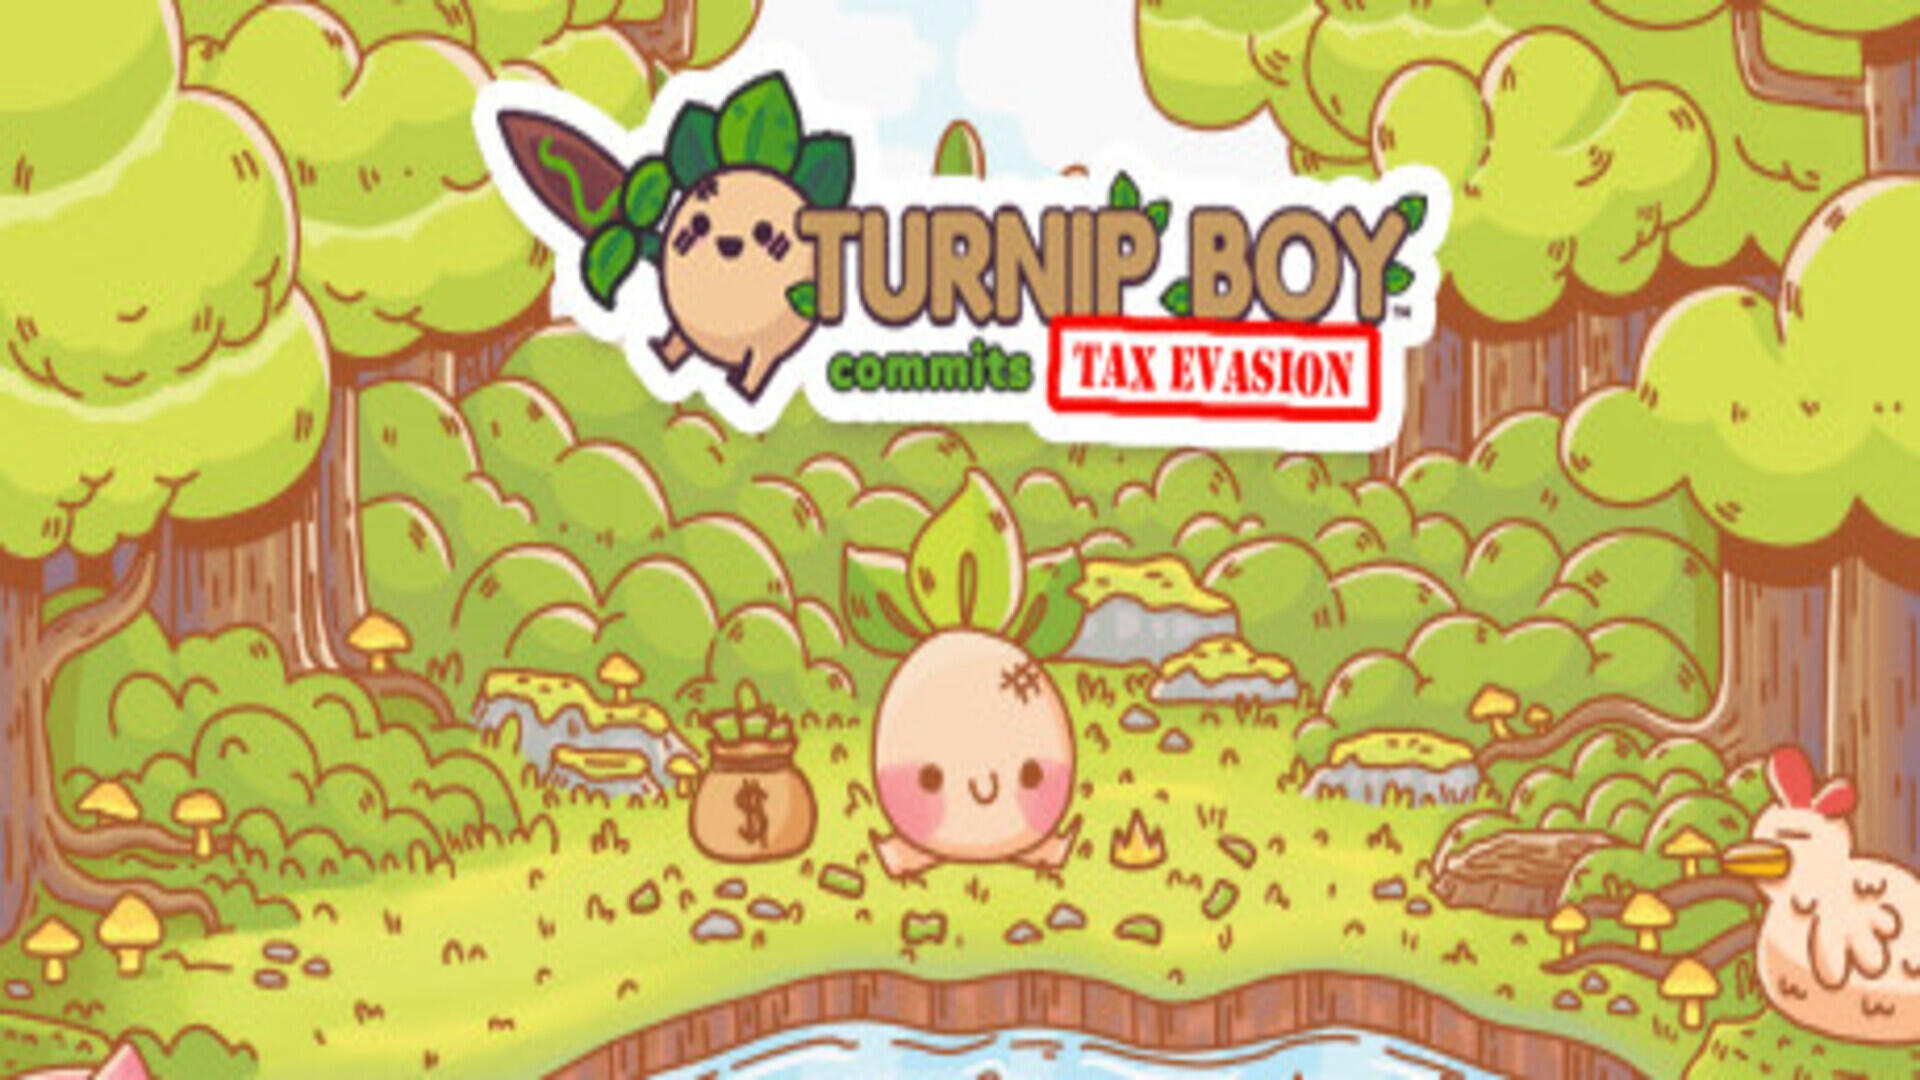 Turnip Boy Commits Tax Evasion (Build 9580945)